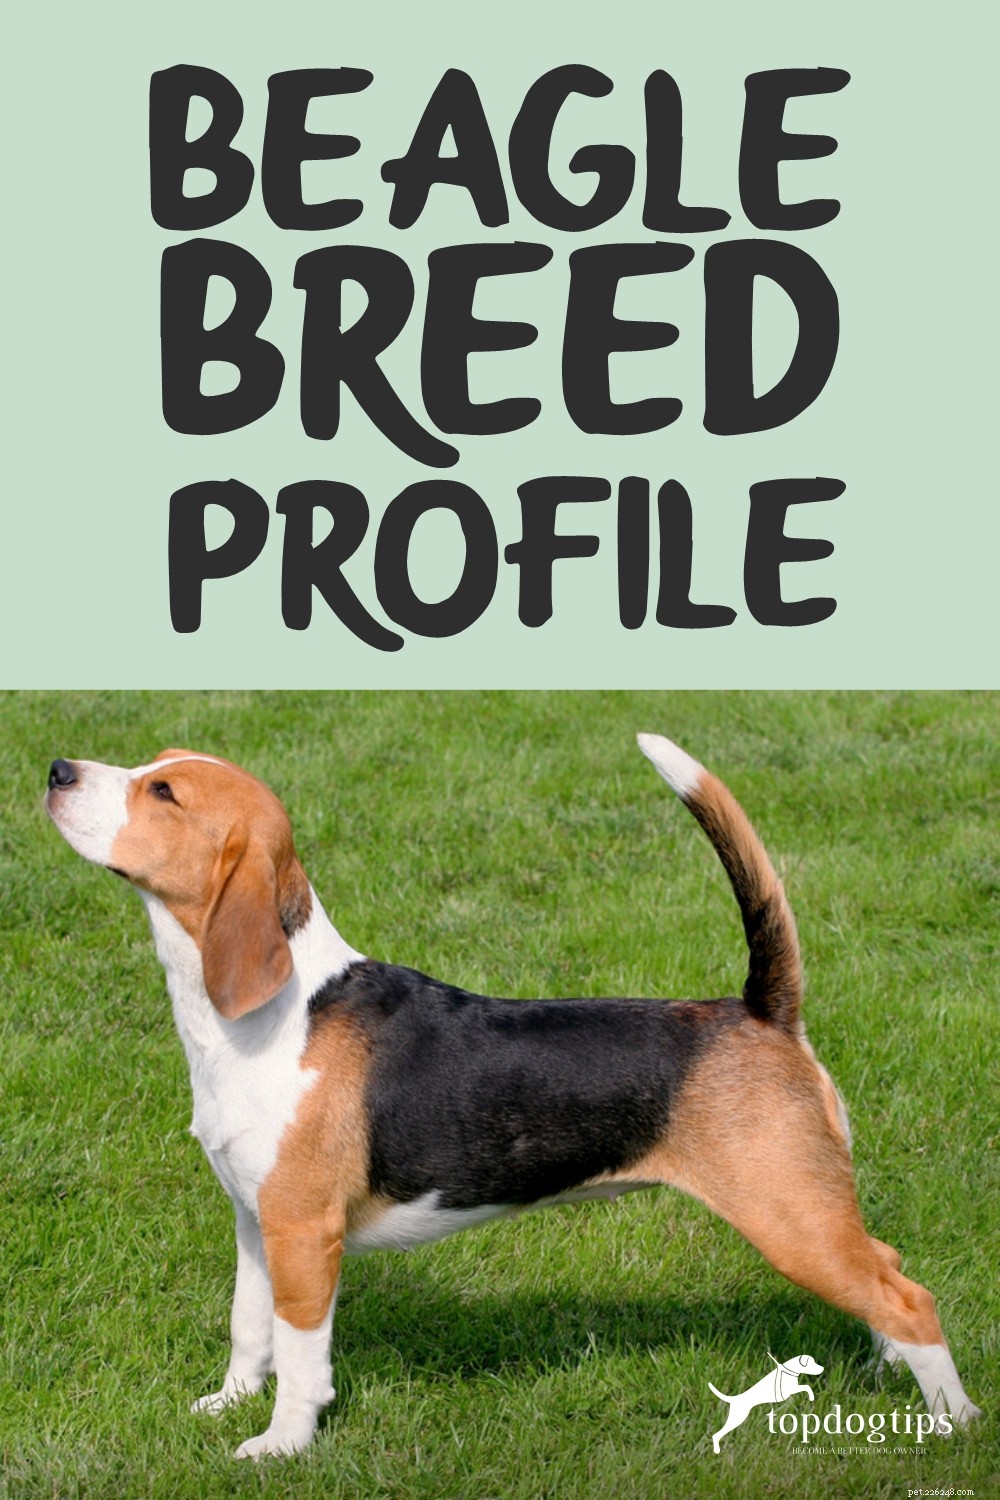 Perfil da raça Beagle (atualizado)